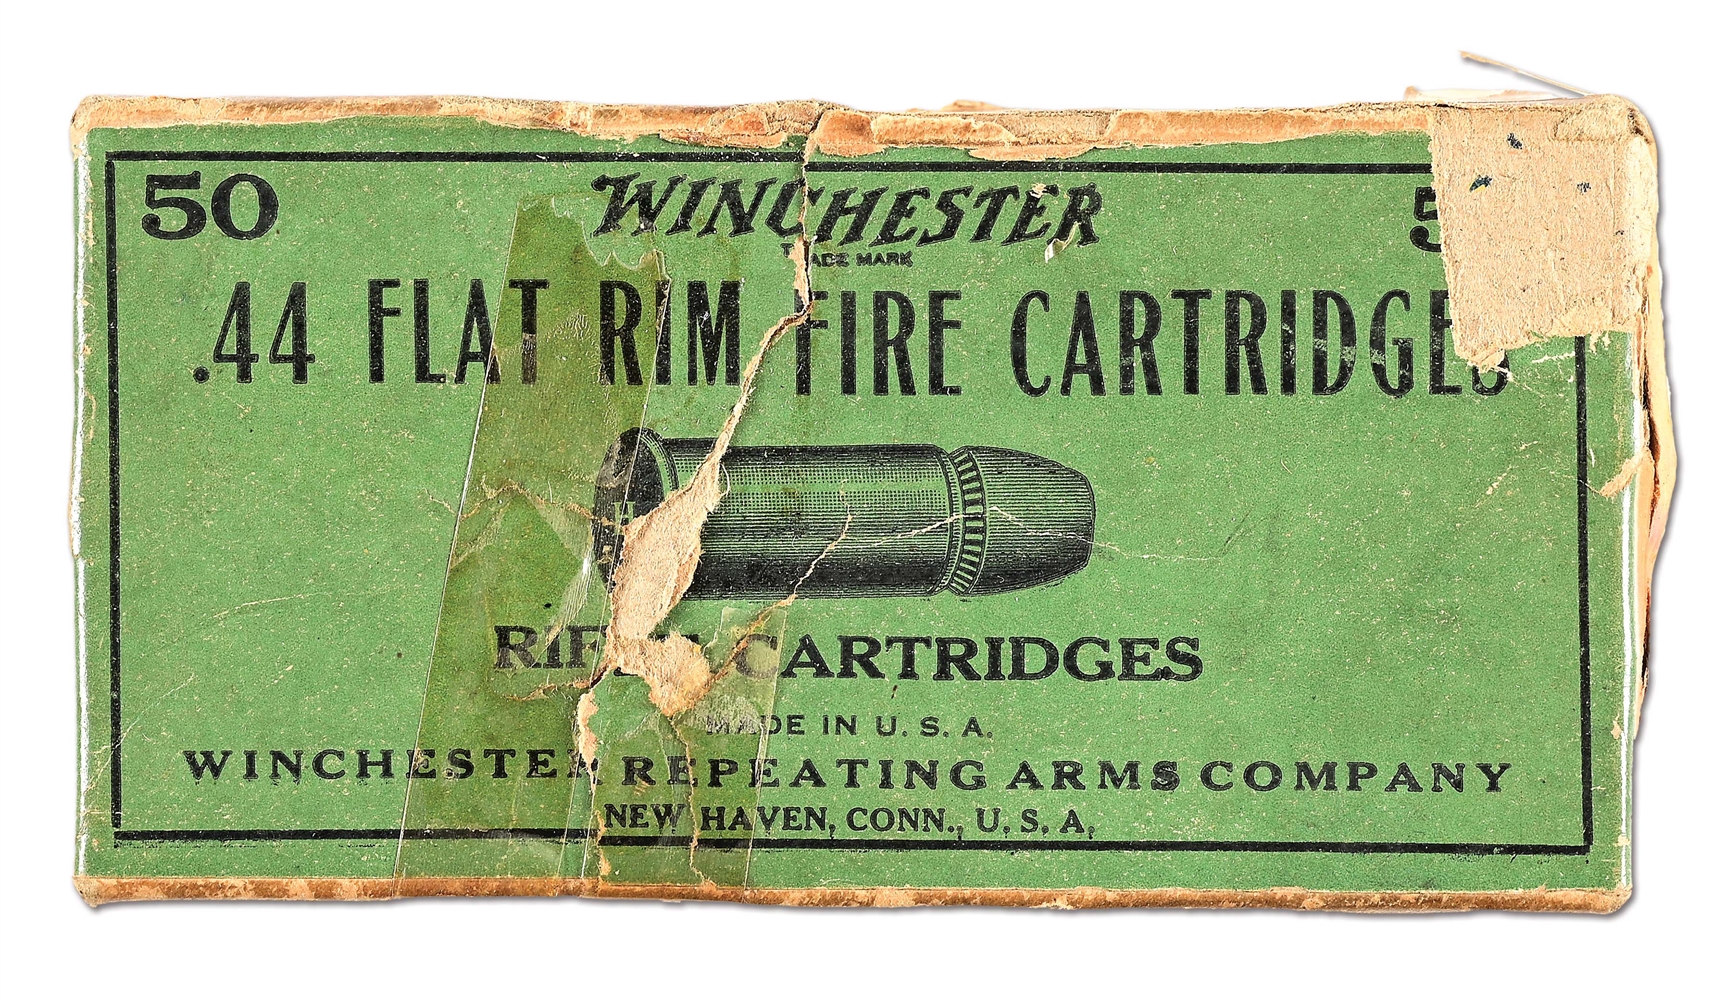 BOX OF WINCHESTER .44 FLAT RIM FIRE CARTRIDGES. 